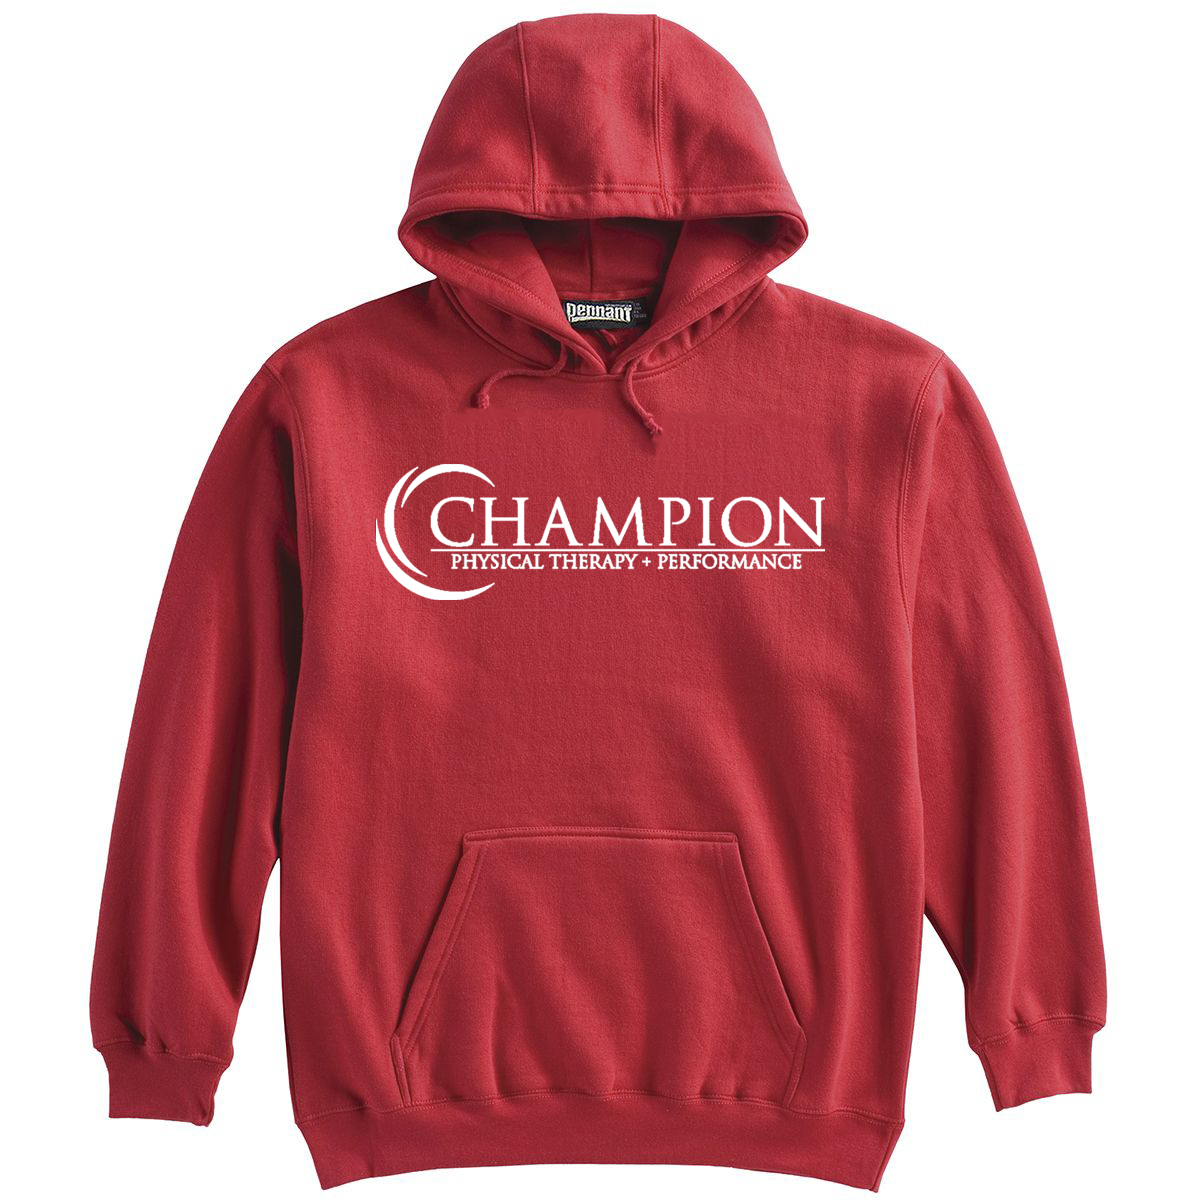 Champion Physical Therapy Sweatshirt